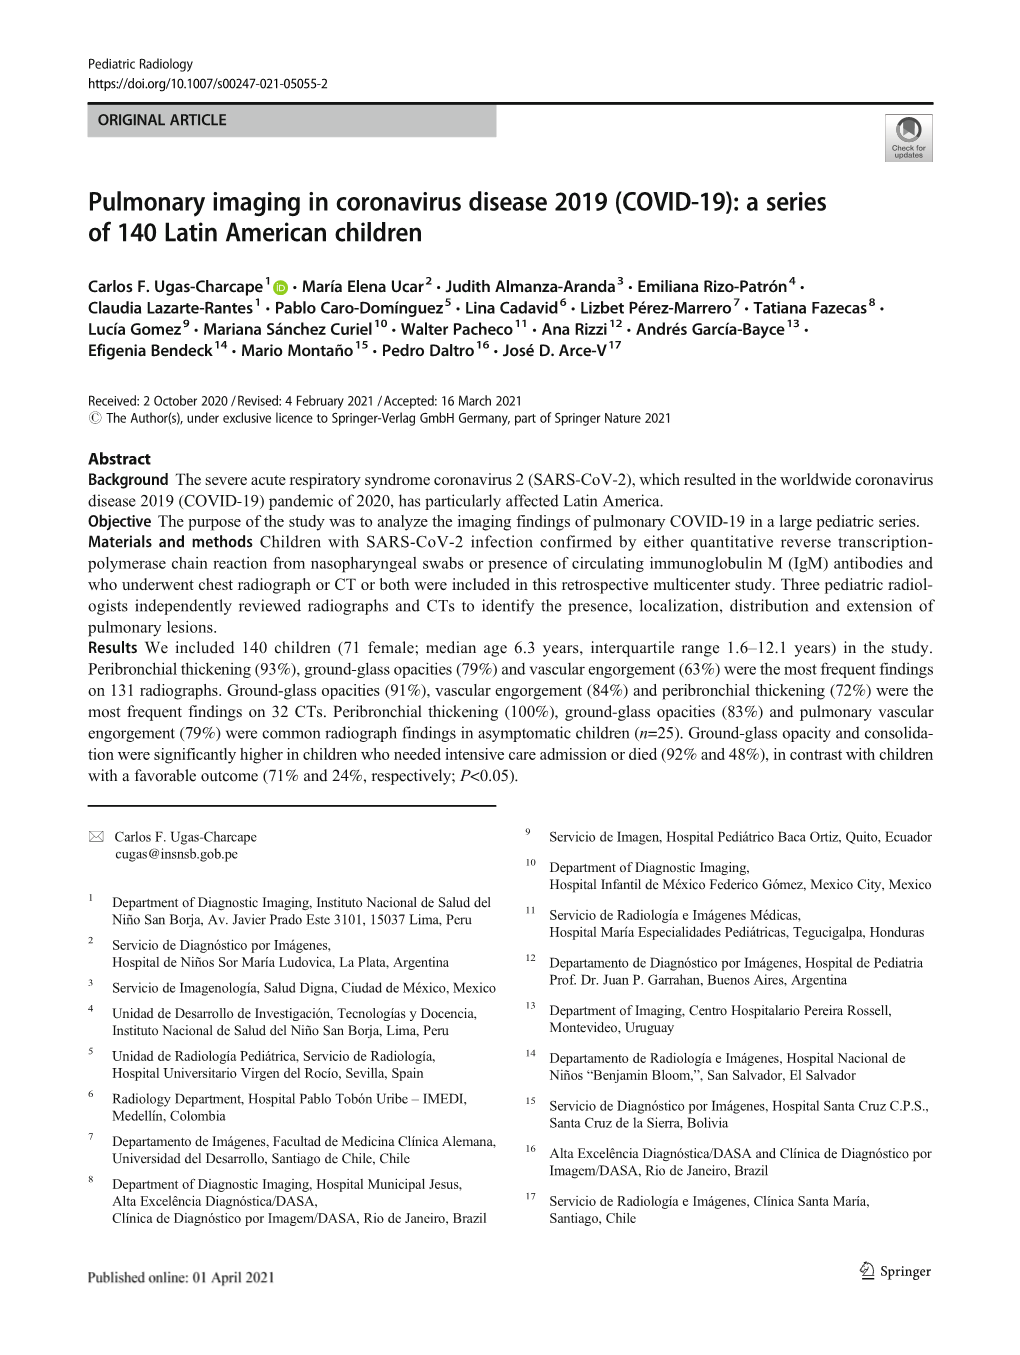 Pulmonary Imaging in Coronavirus Disease 2019 (COVID-19): a Series of 140 Latin American Children